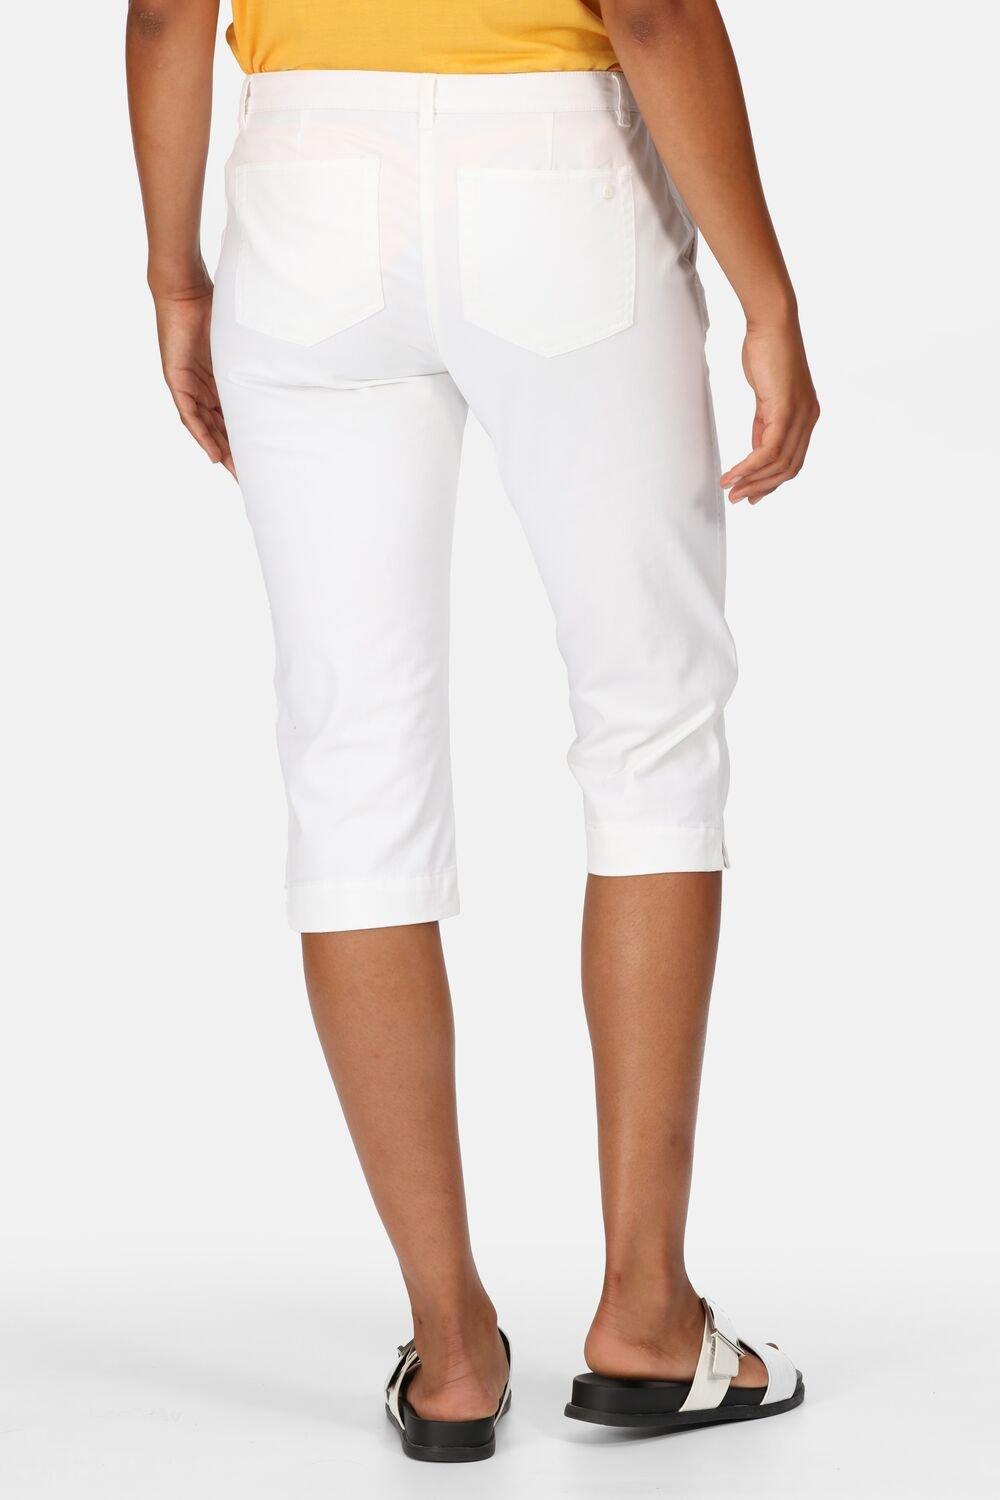 Ladies Summer Capri Pants Size 14 16 Large Cropped Trousers 100